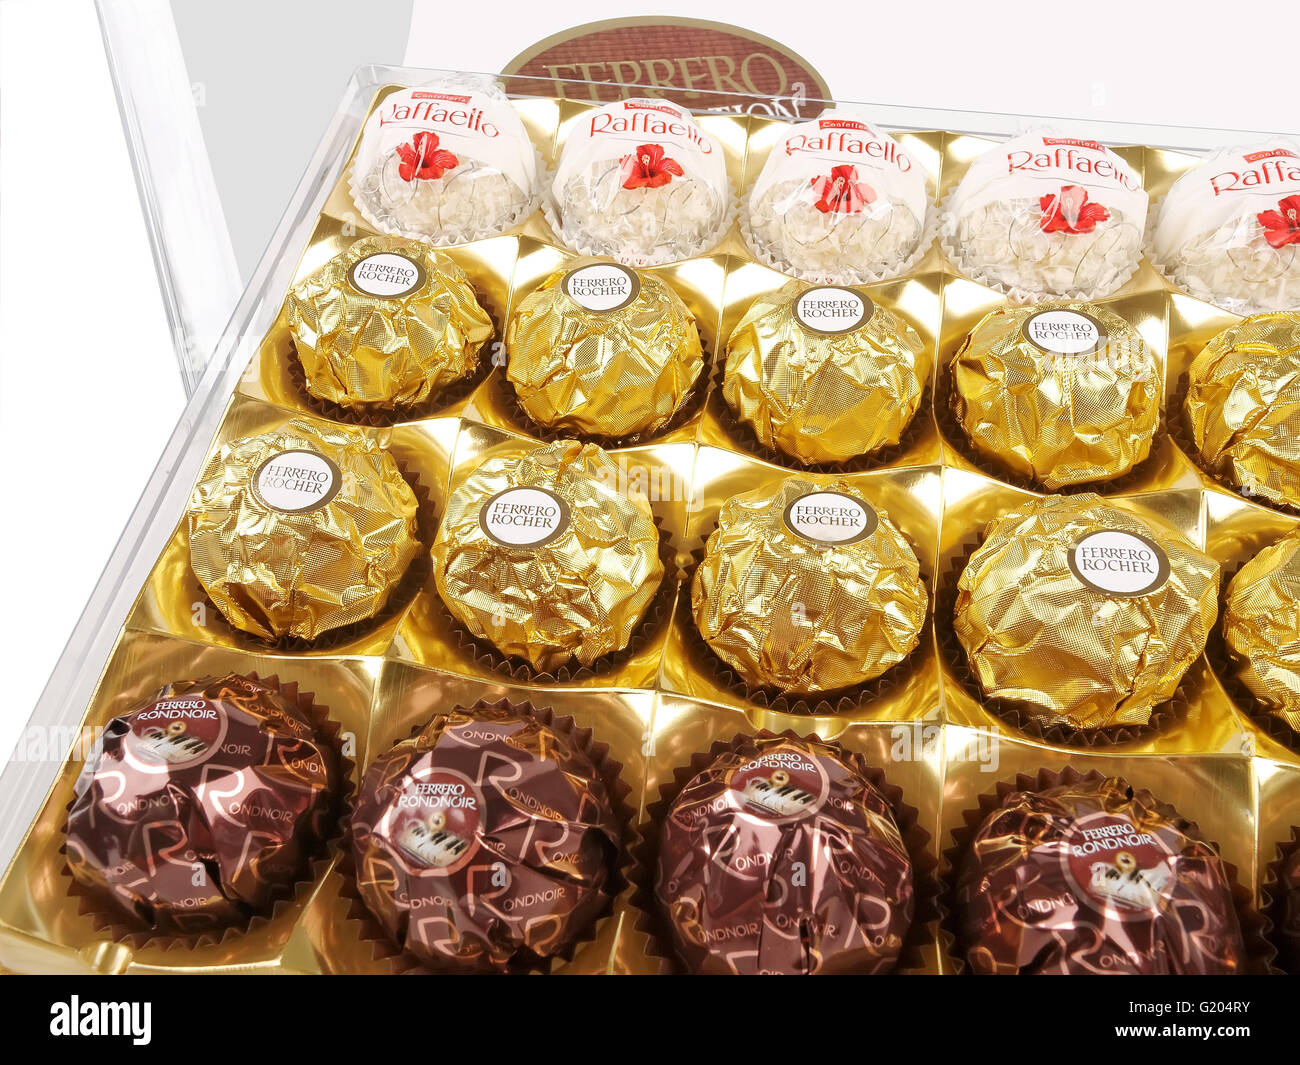 Ferrero Rocher Dark Rondnoir Chocolate Balls Gift Box 14 Pack